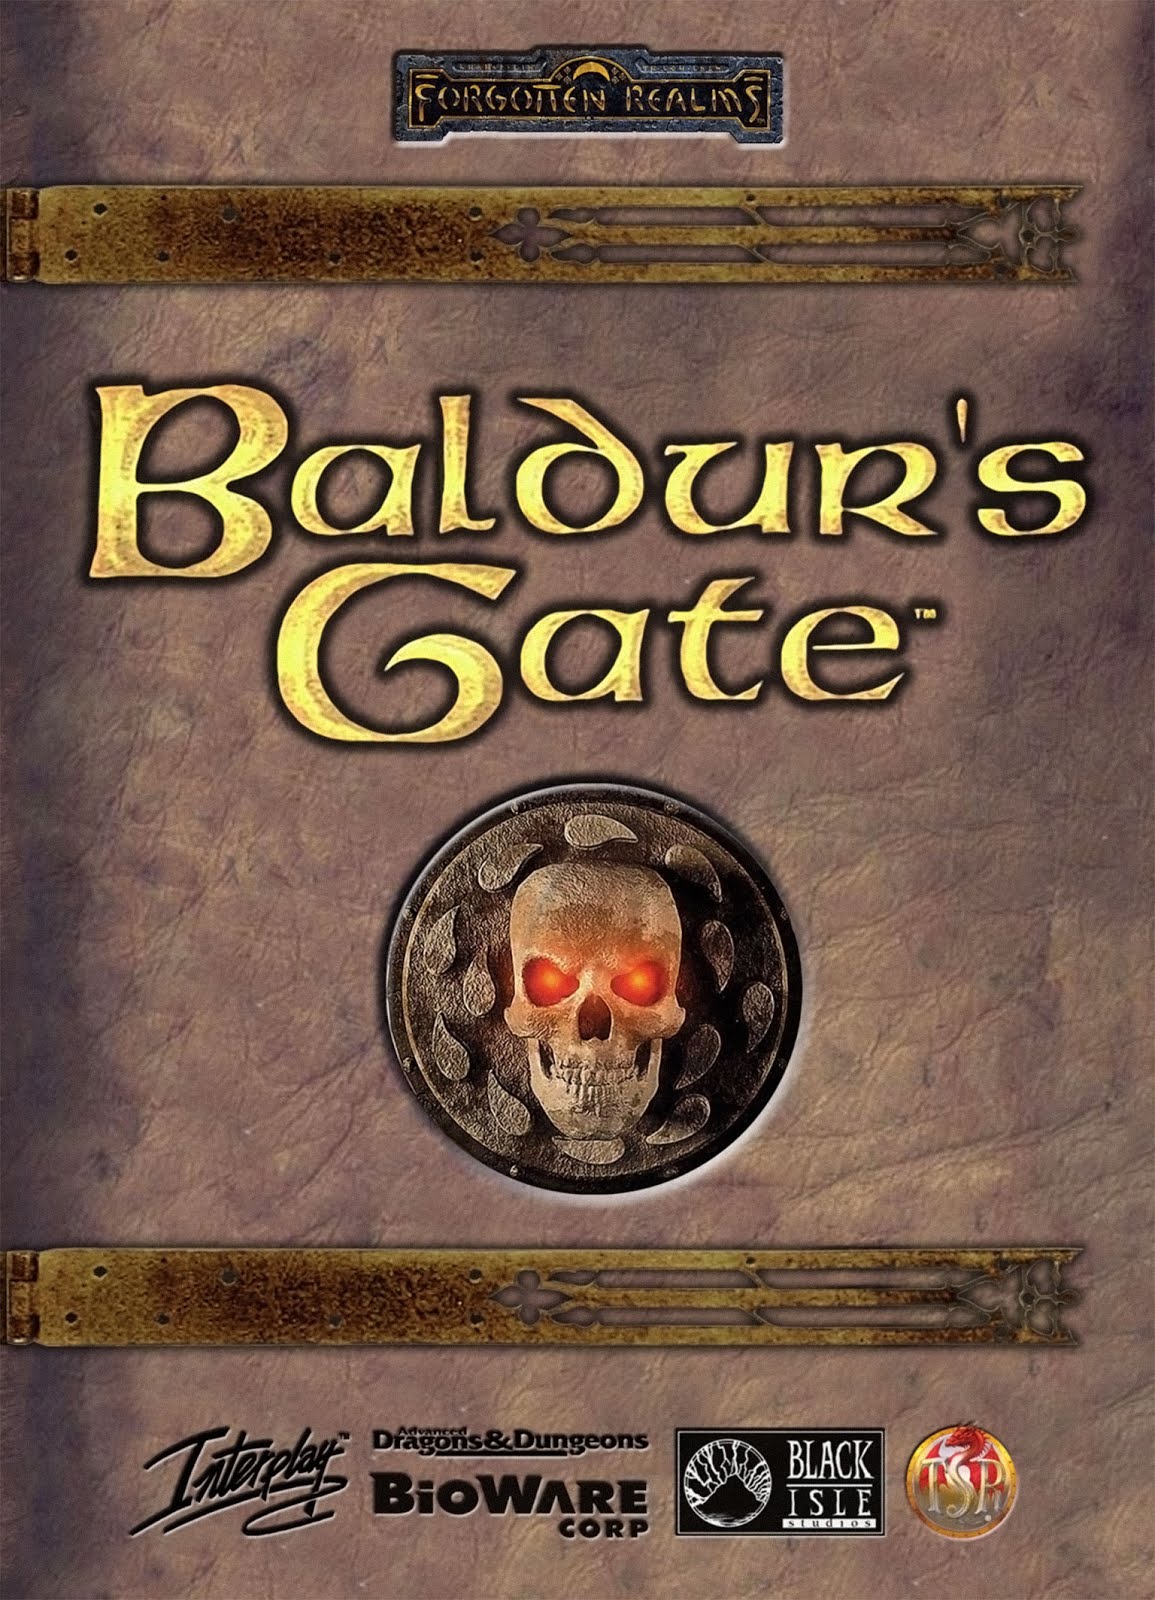 The Original Baldur's Gate